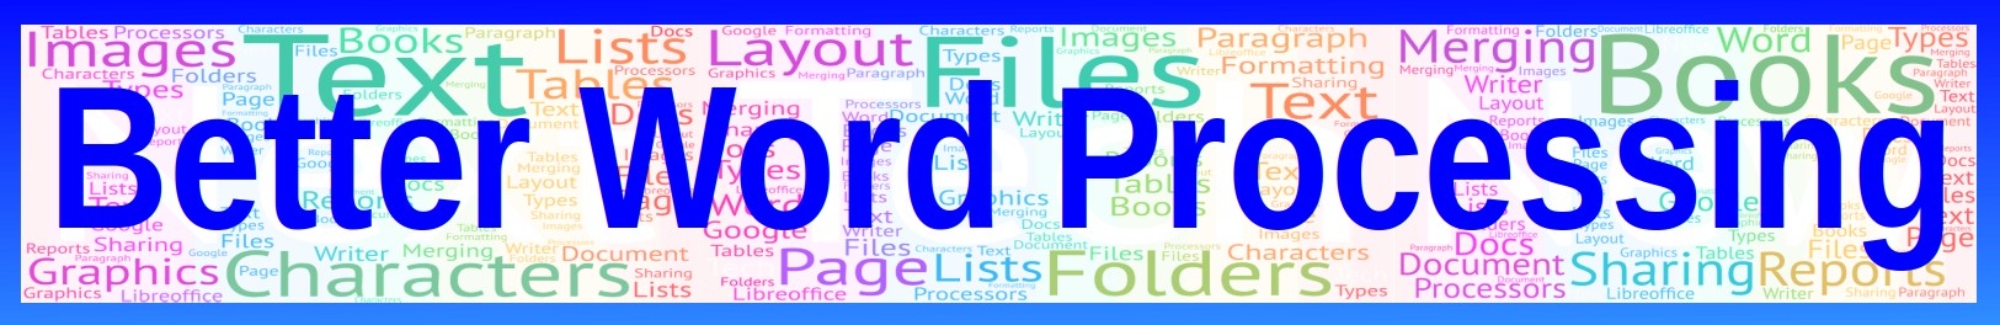 better word processing logo 2000